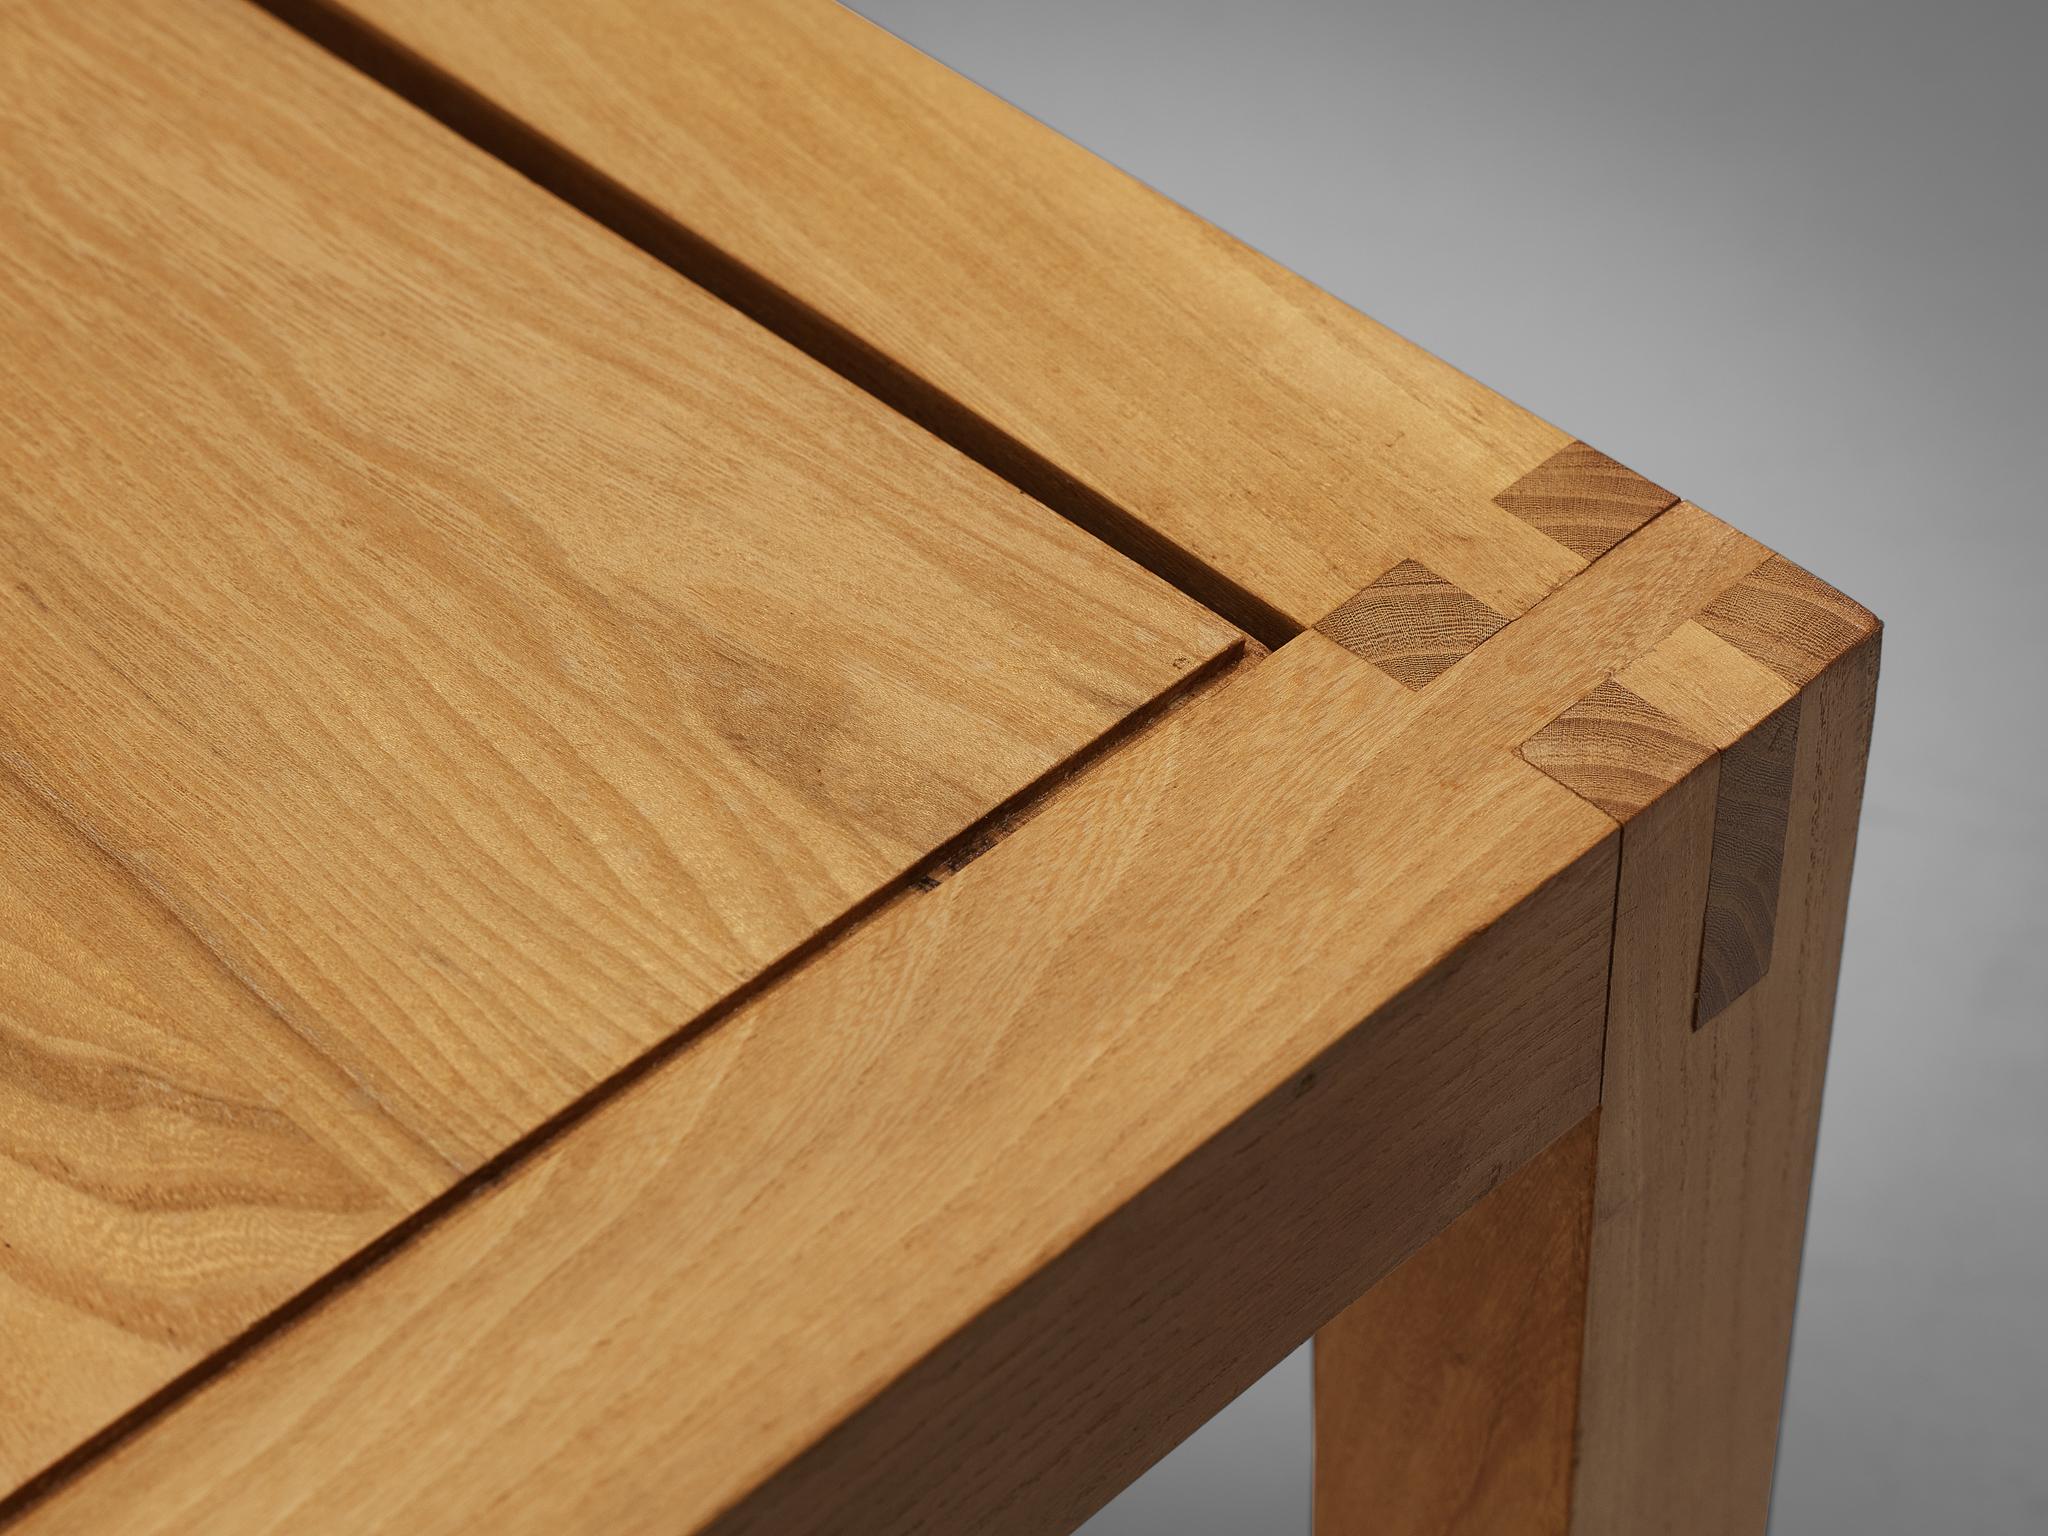 Maison Regain Cubic Side Table in Solid Elm